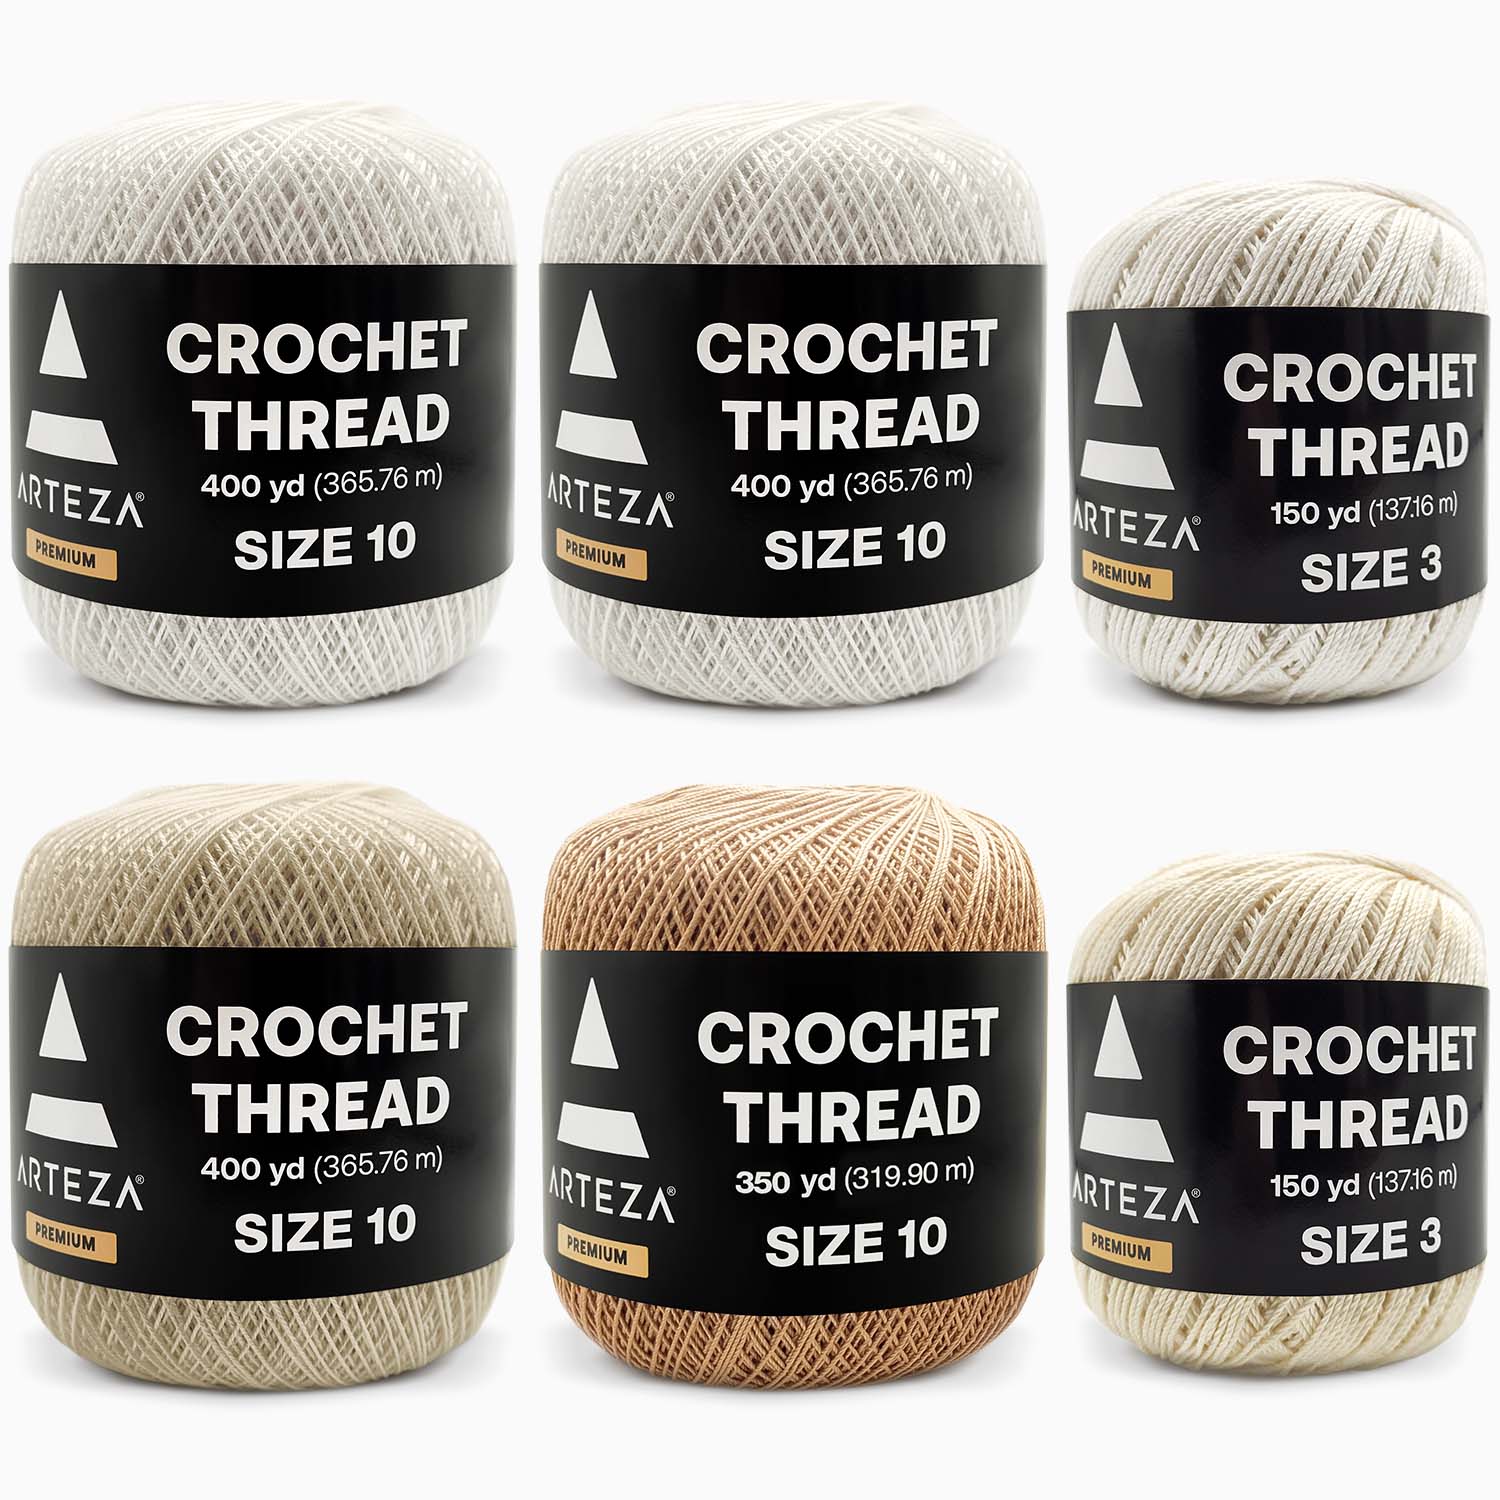 Coats Aunt Lydias Classic Crochet Thread – Good's Store Online